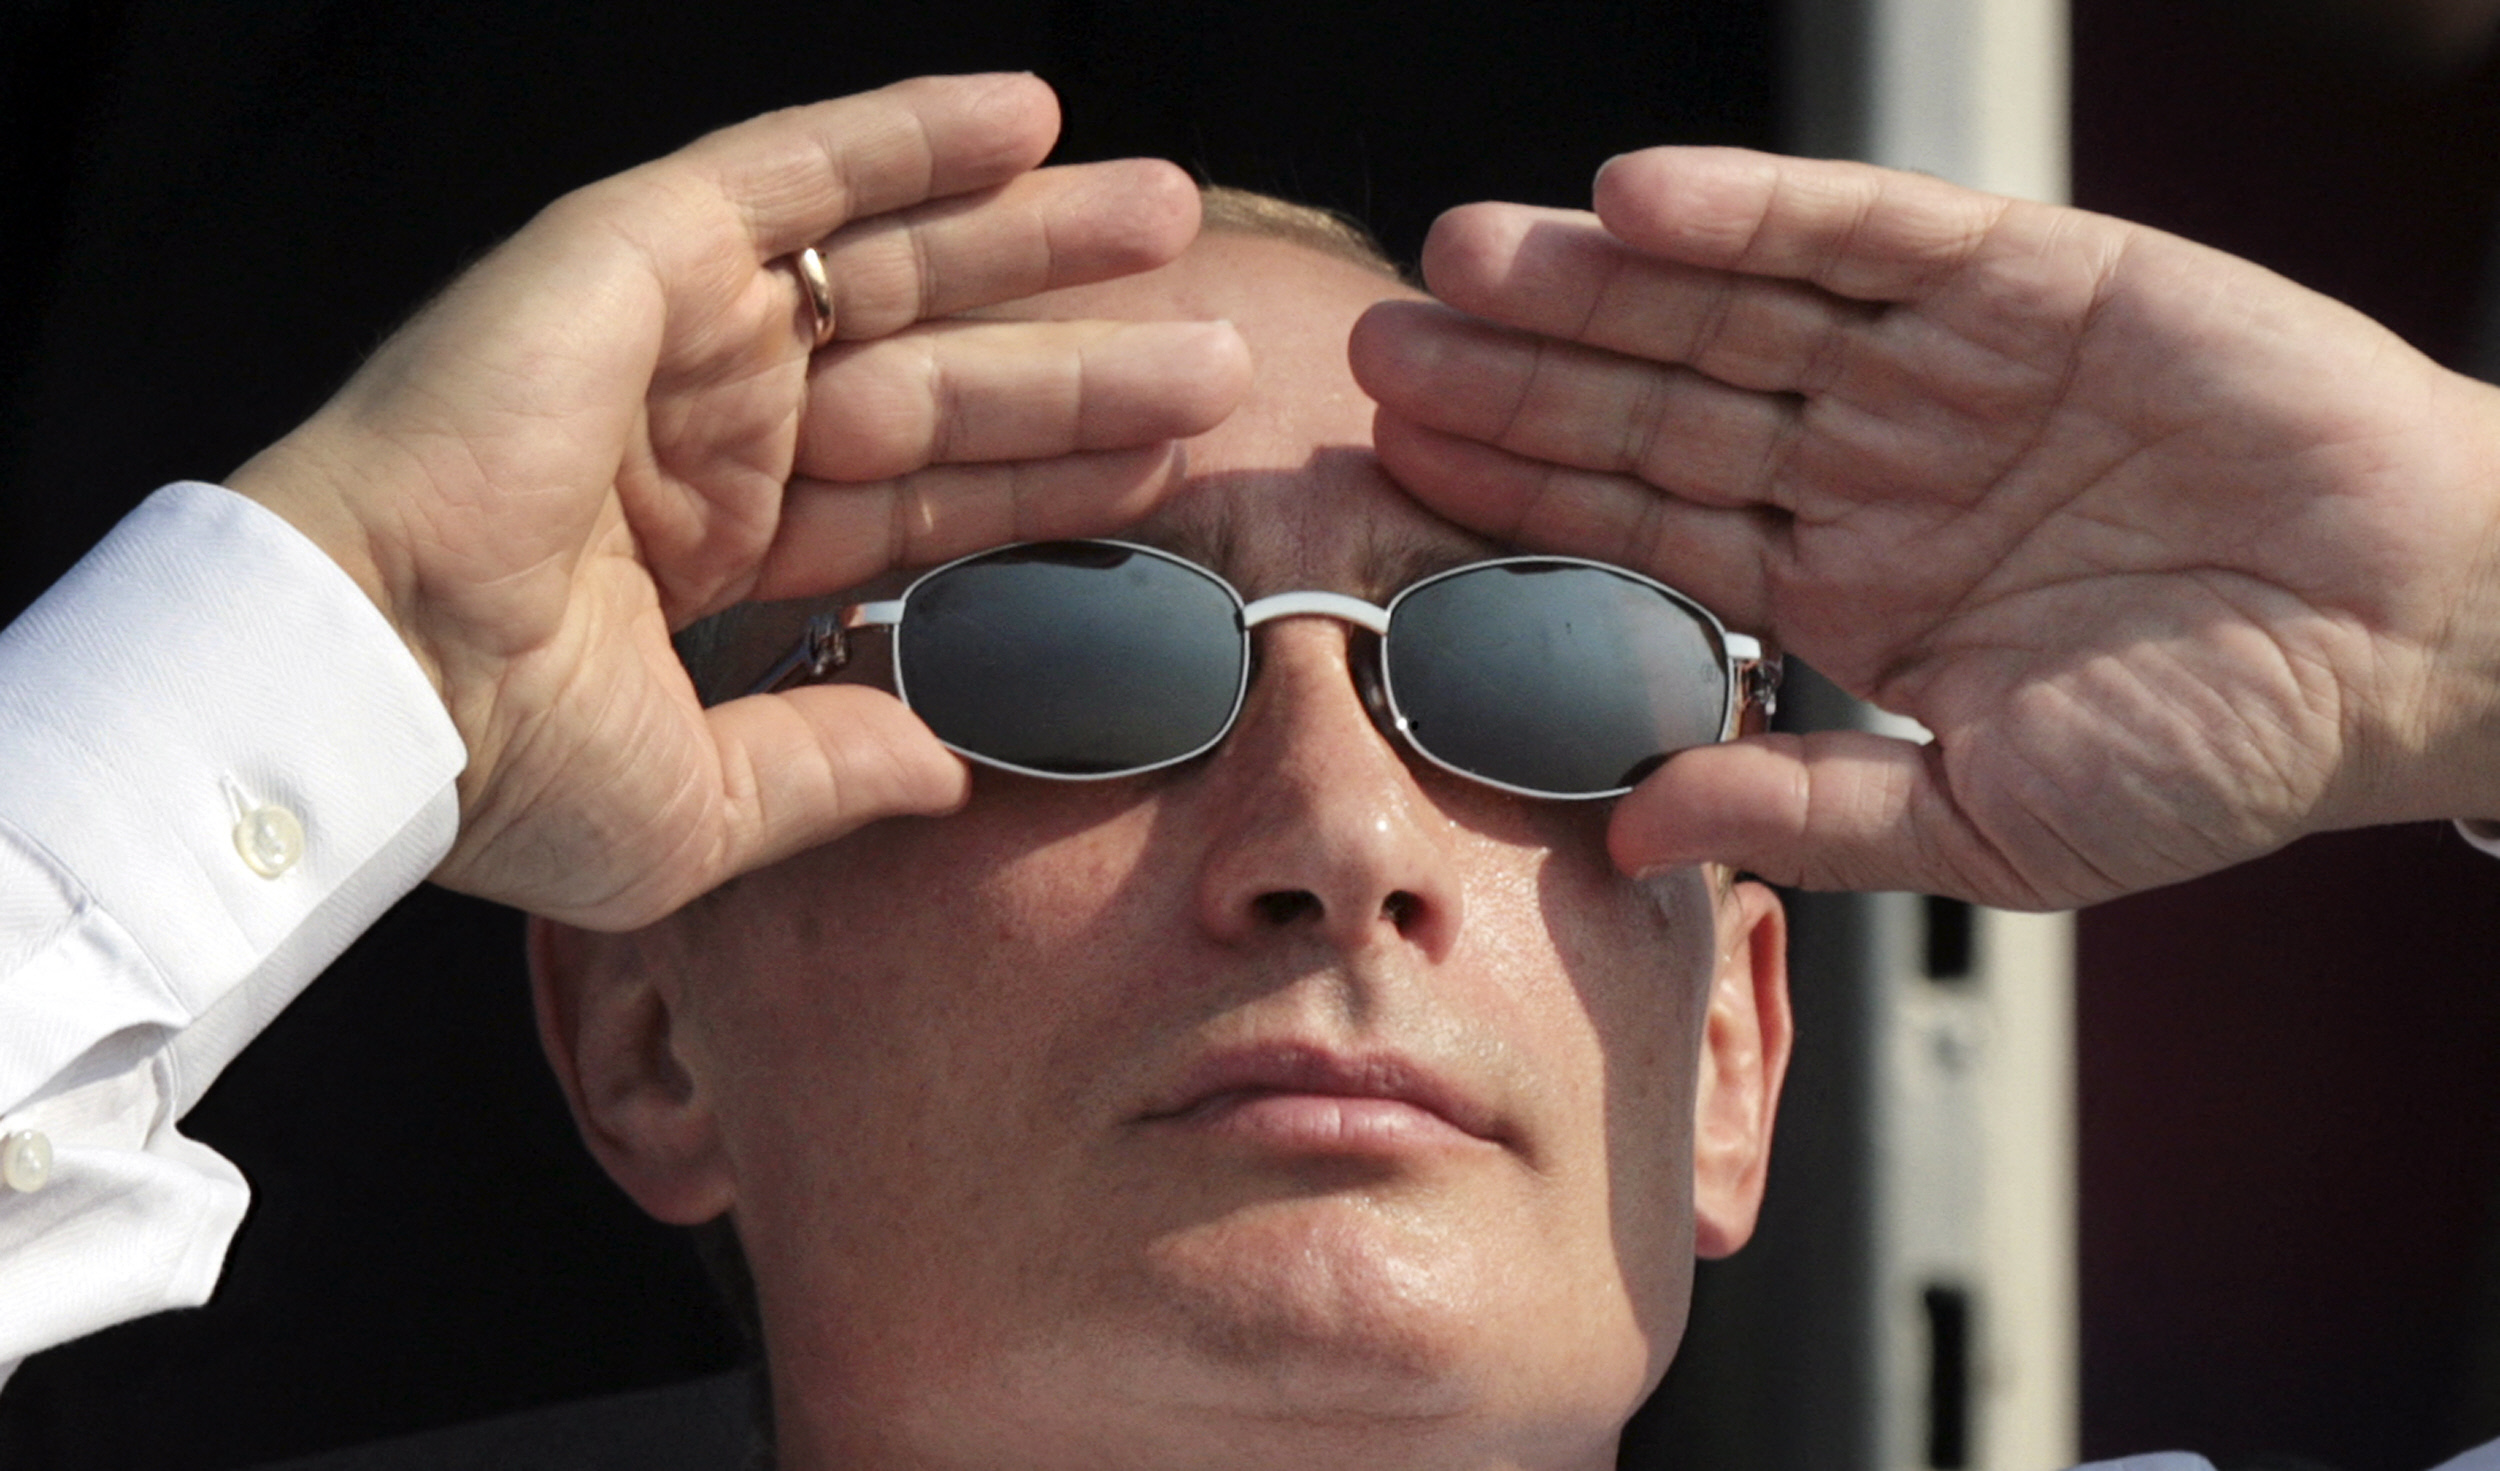 Vladimir Putin, in an image from 2007.